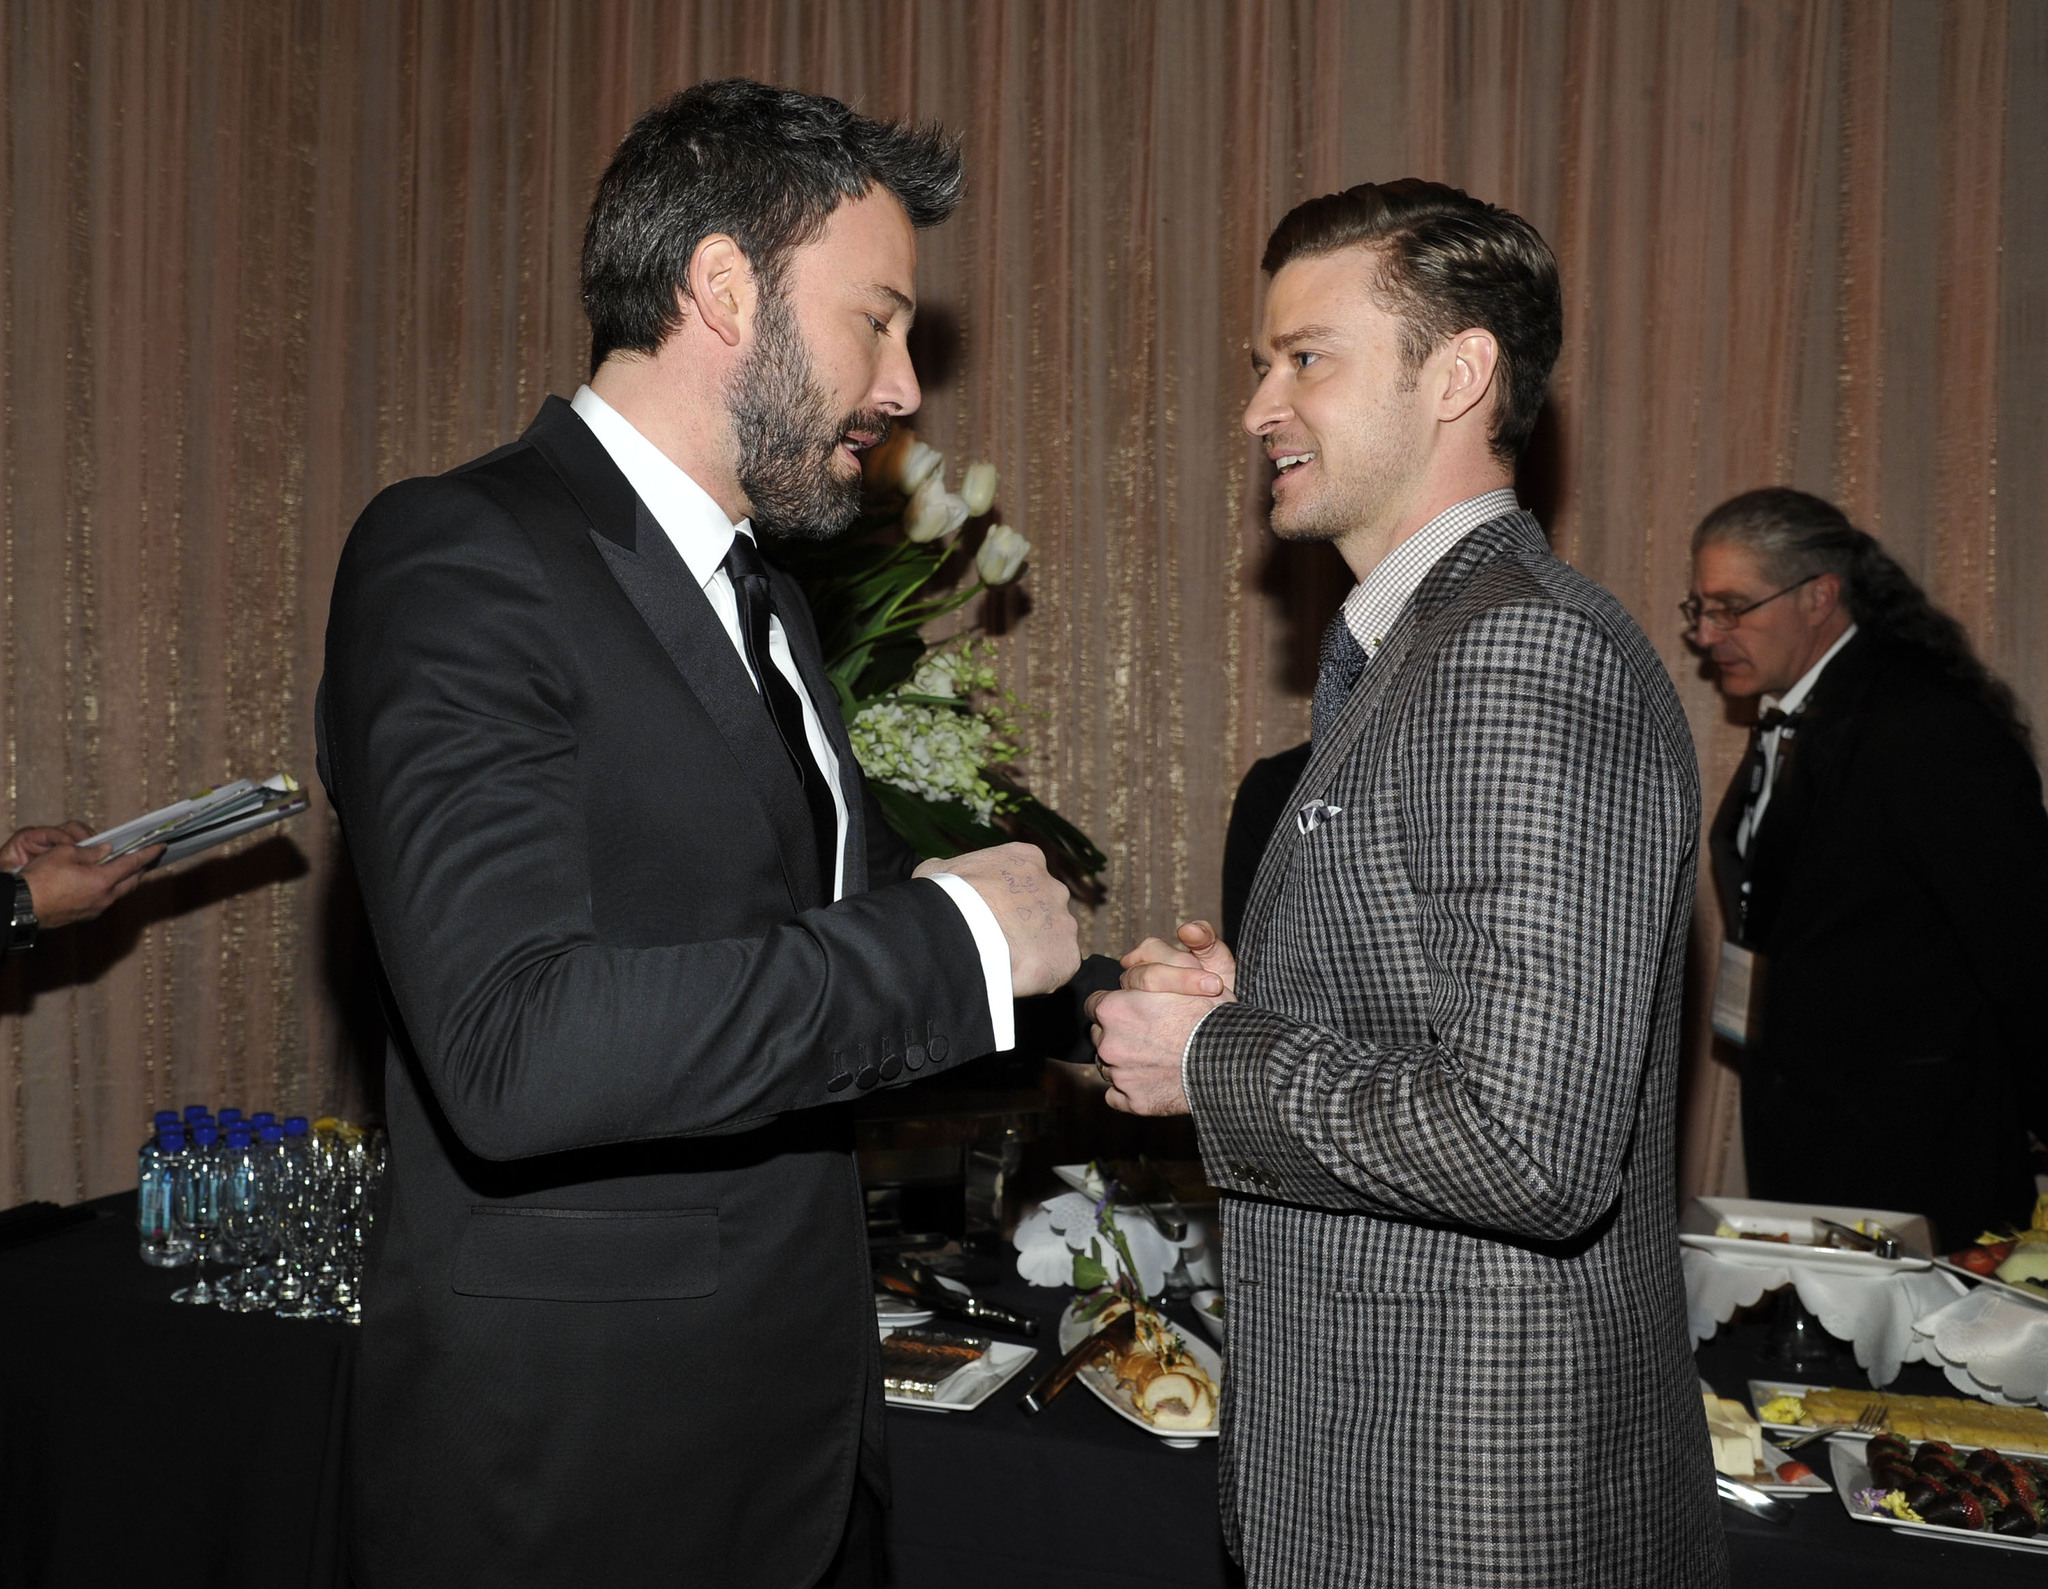 Ben Affleck and Justin Timberlake